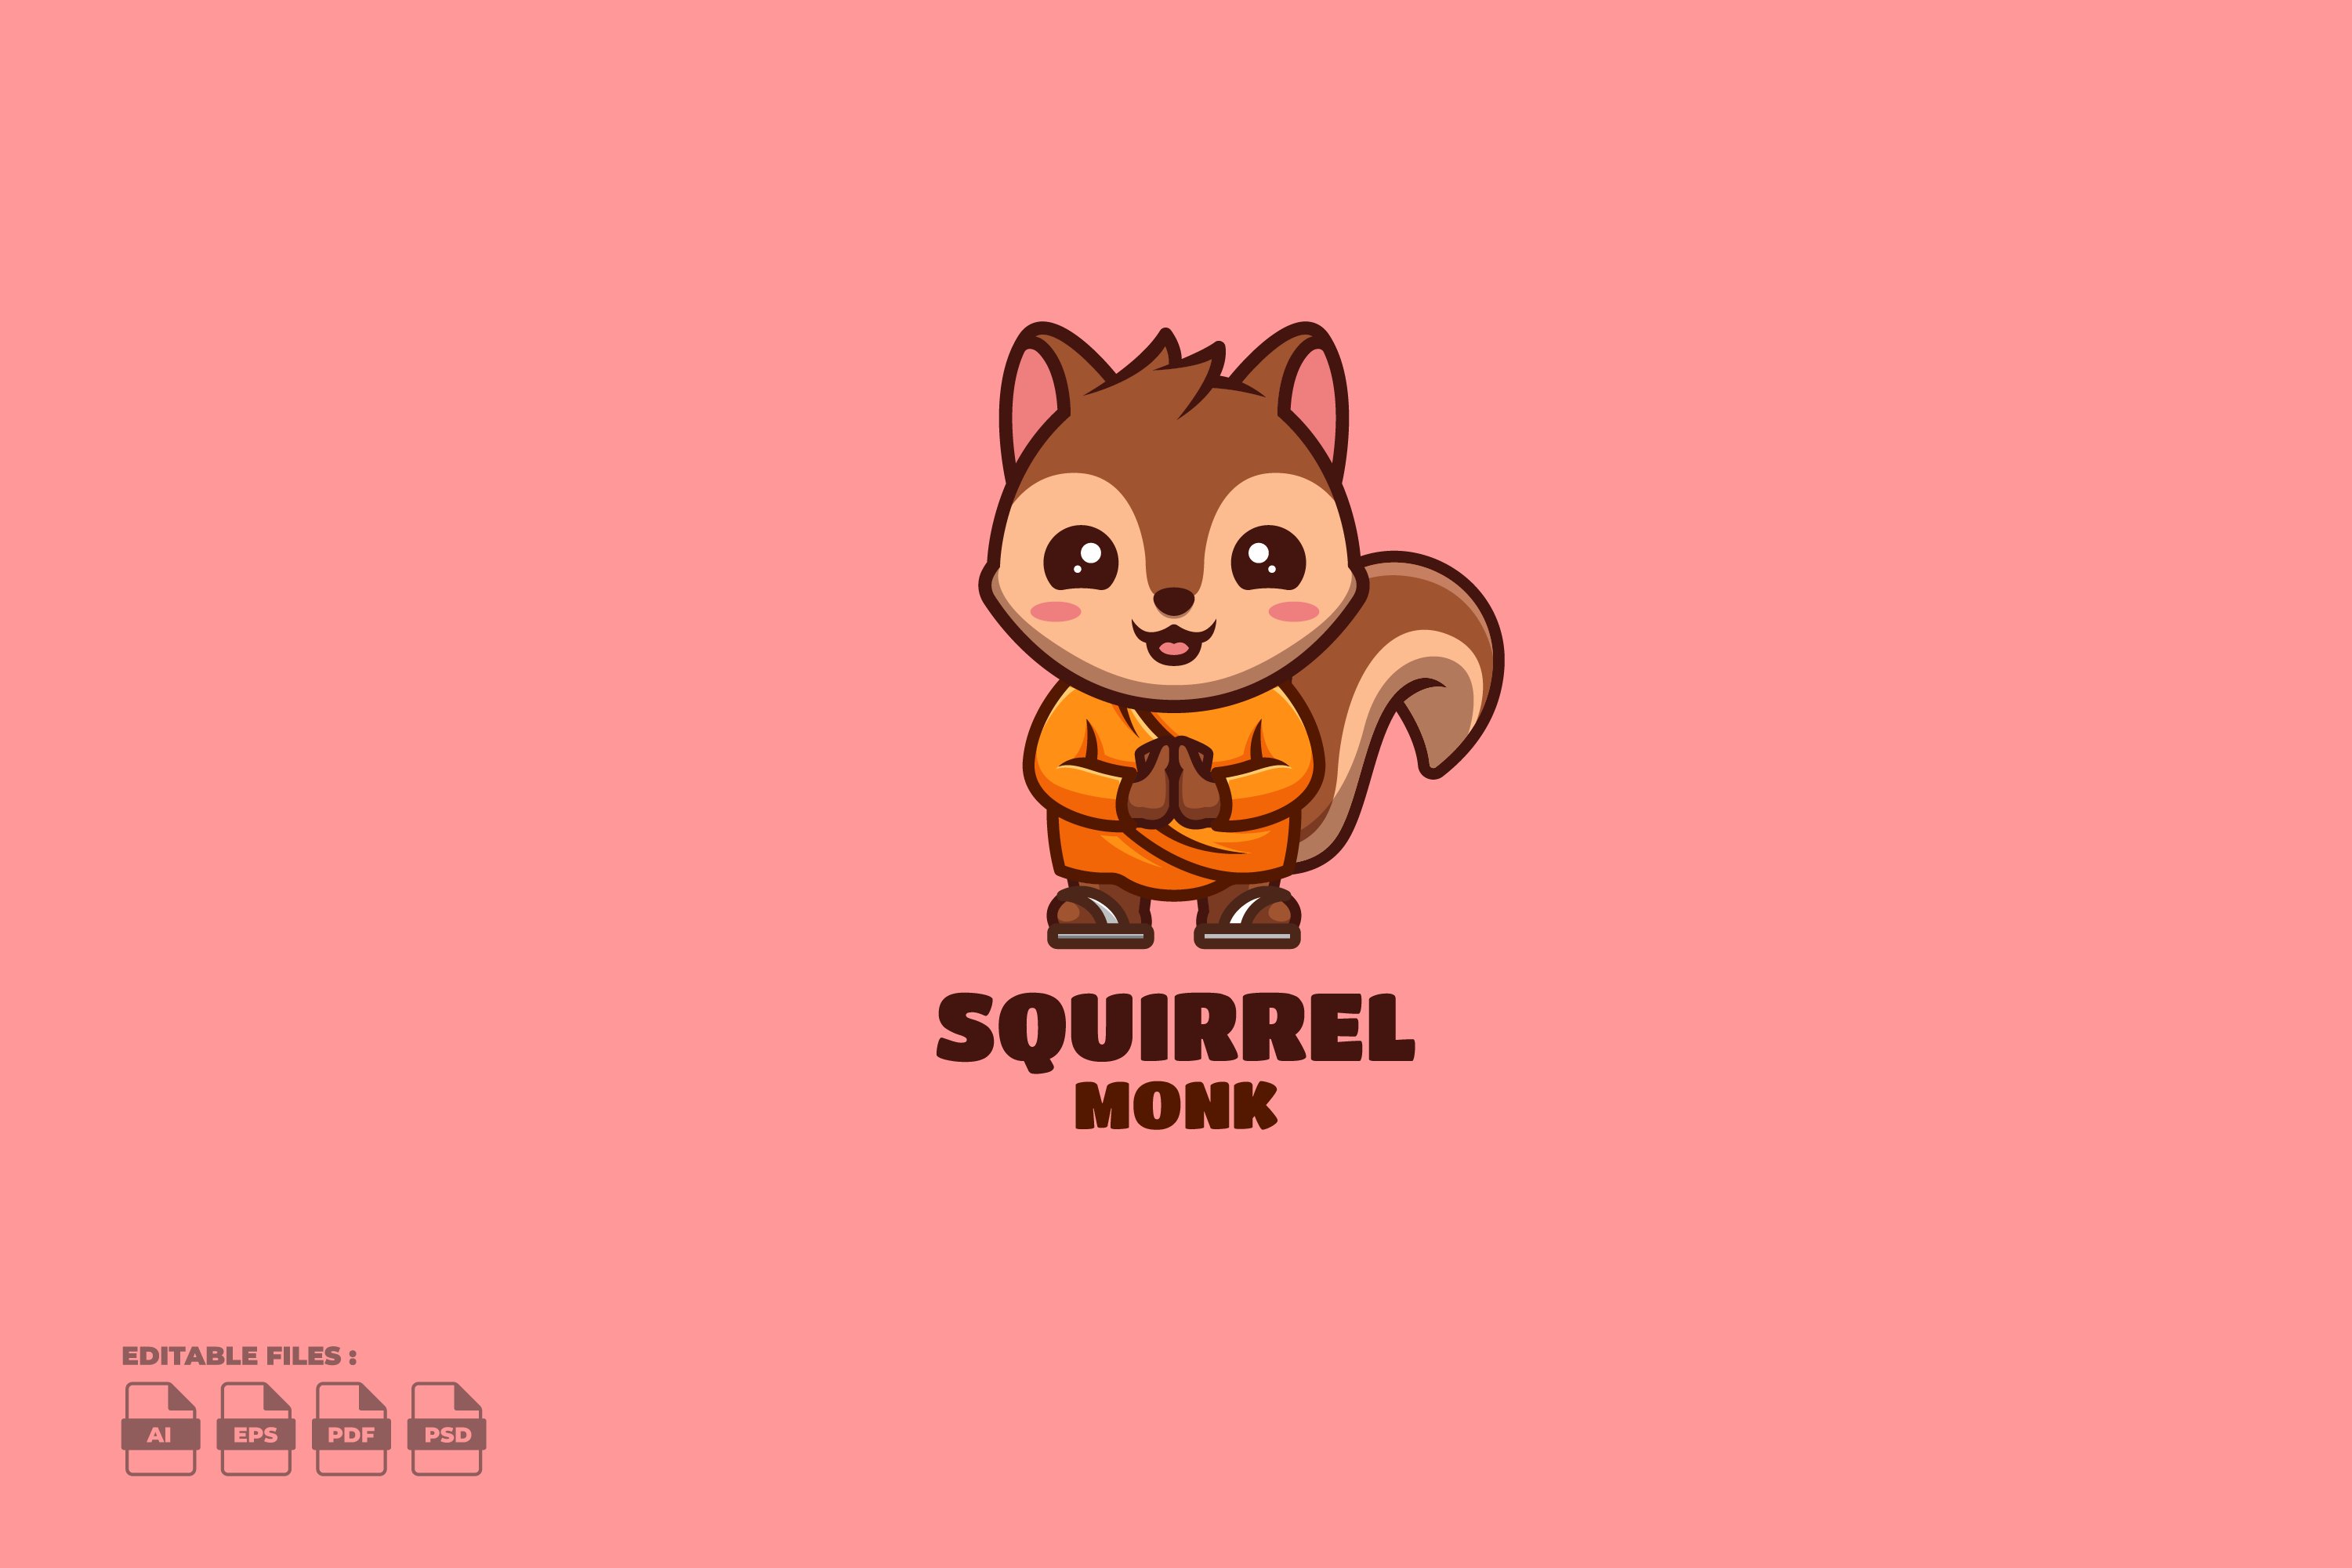 Monk Squirrel Cute Mascot Logo cover image.